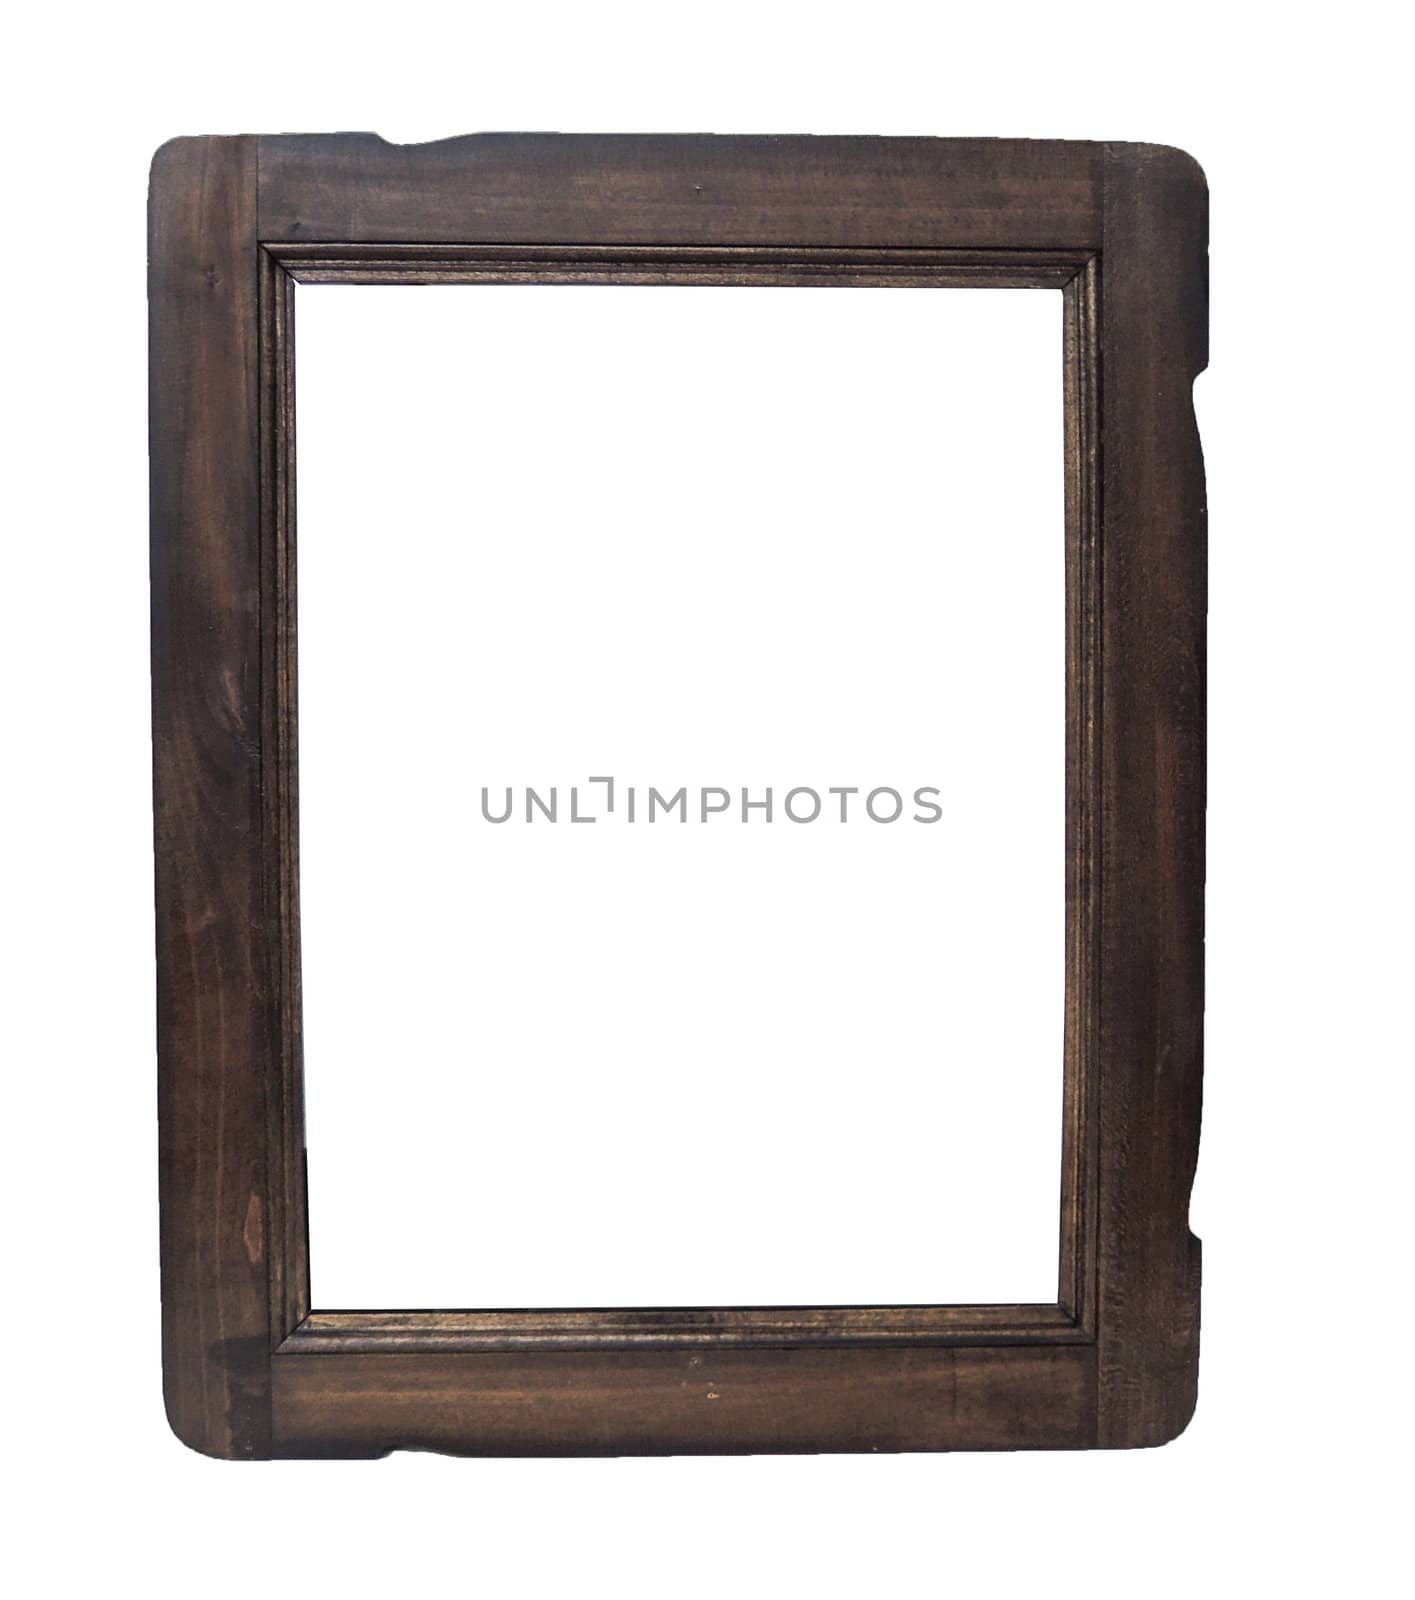 Empty wooden frame